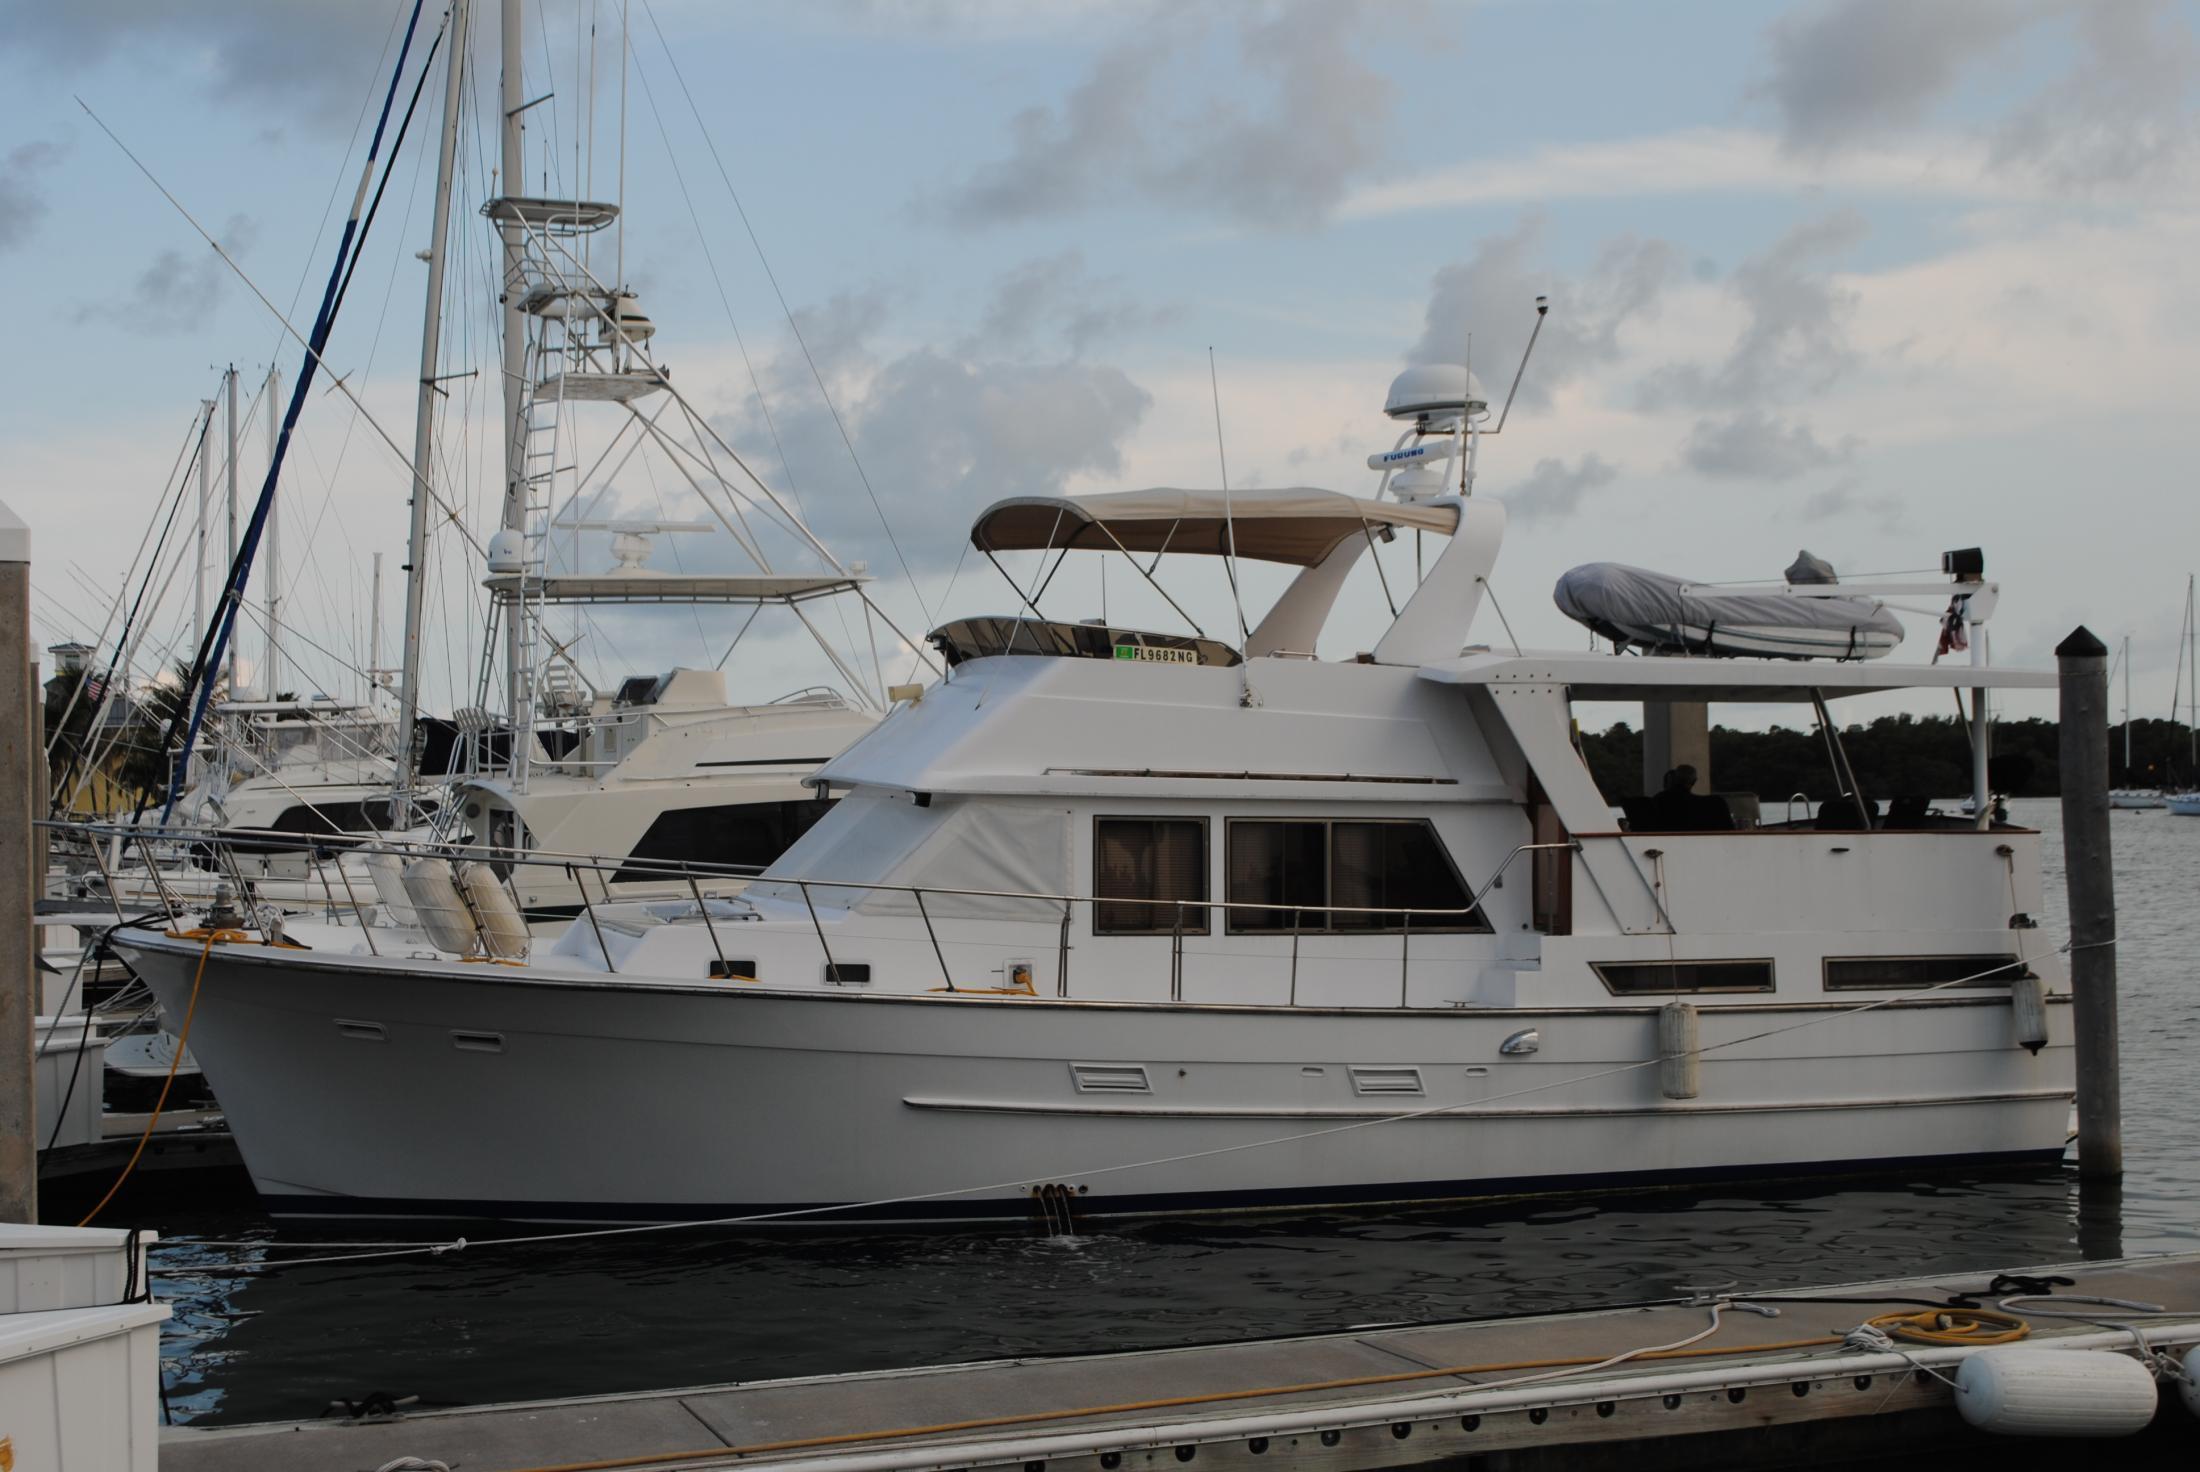 Jefferson Motor Yacht, Miami